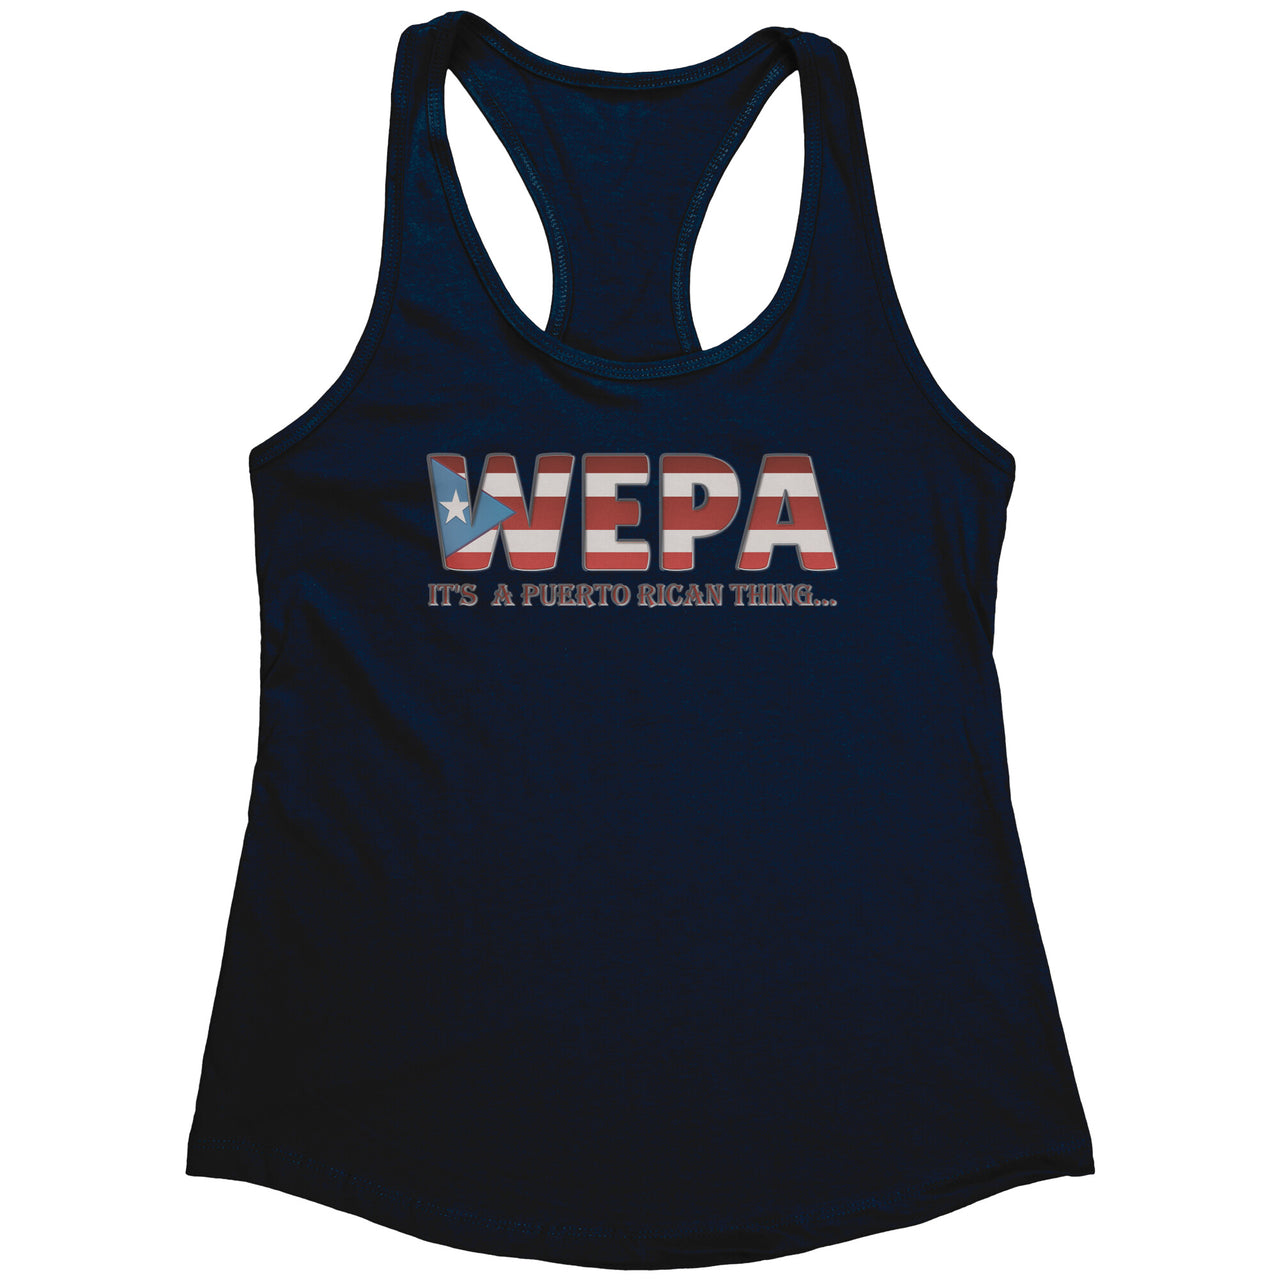 WEPA - PR Thing Woman's Tank